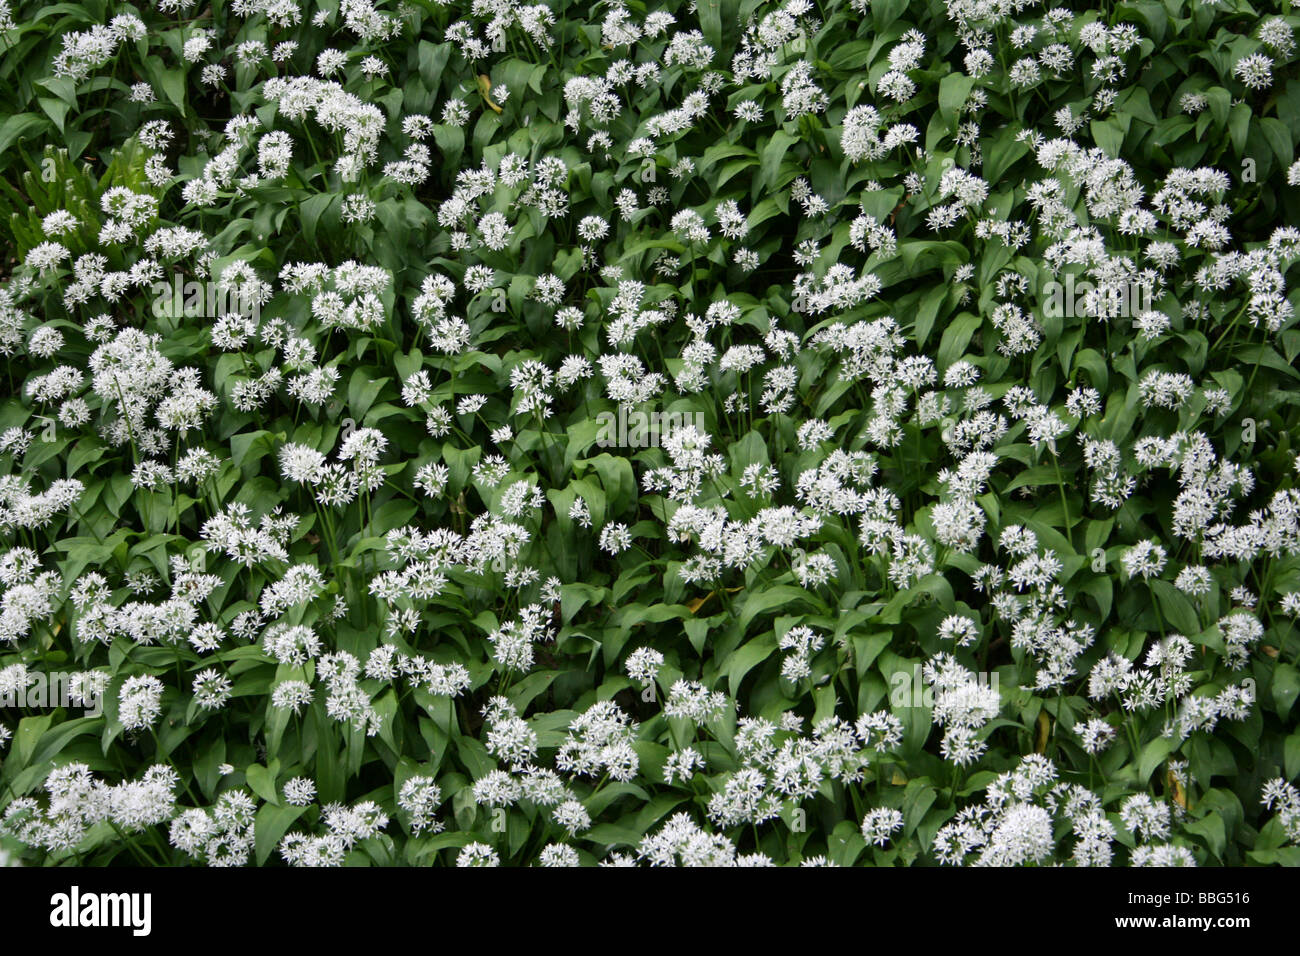 Carpet of Wild Garlic or Ramsons Allium ursinum Covering An English Woodland Floor In Spring Stock Photo